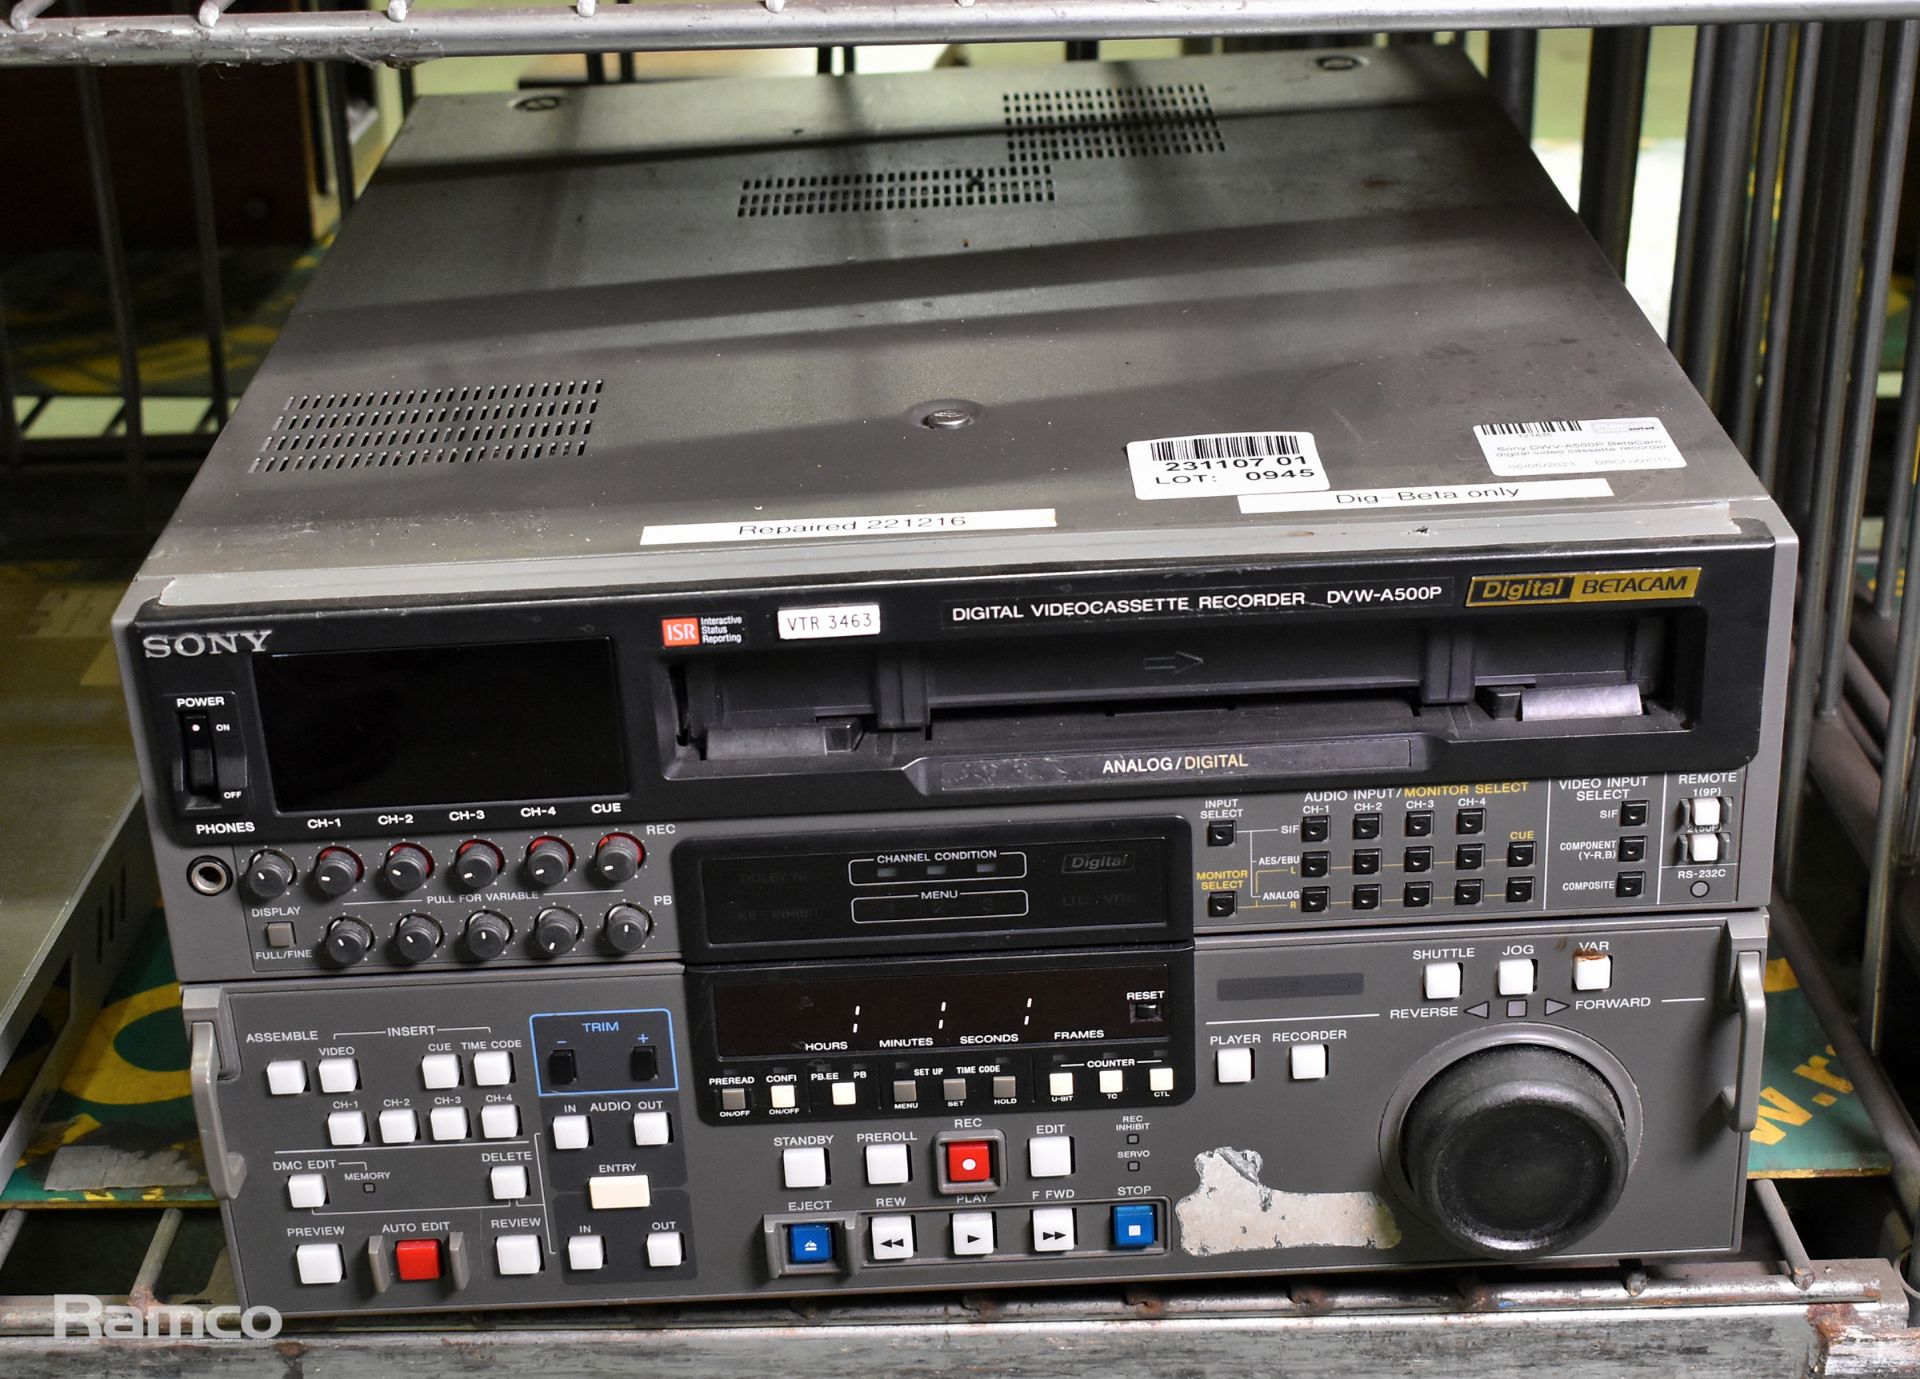 Sony DVW-A500P BetaCam digital video cassette recorder